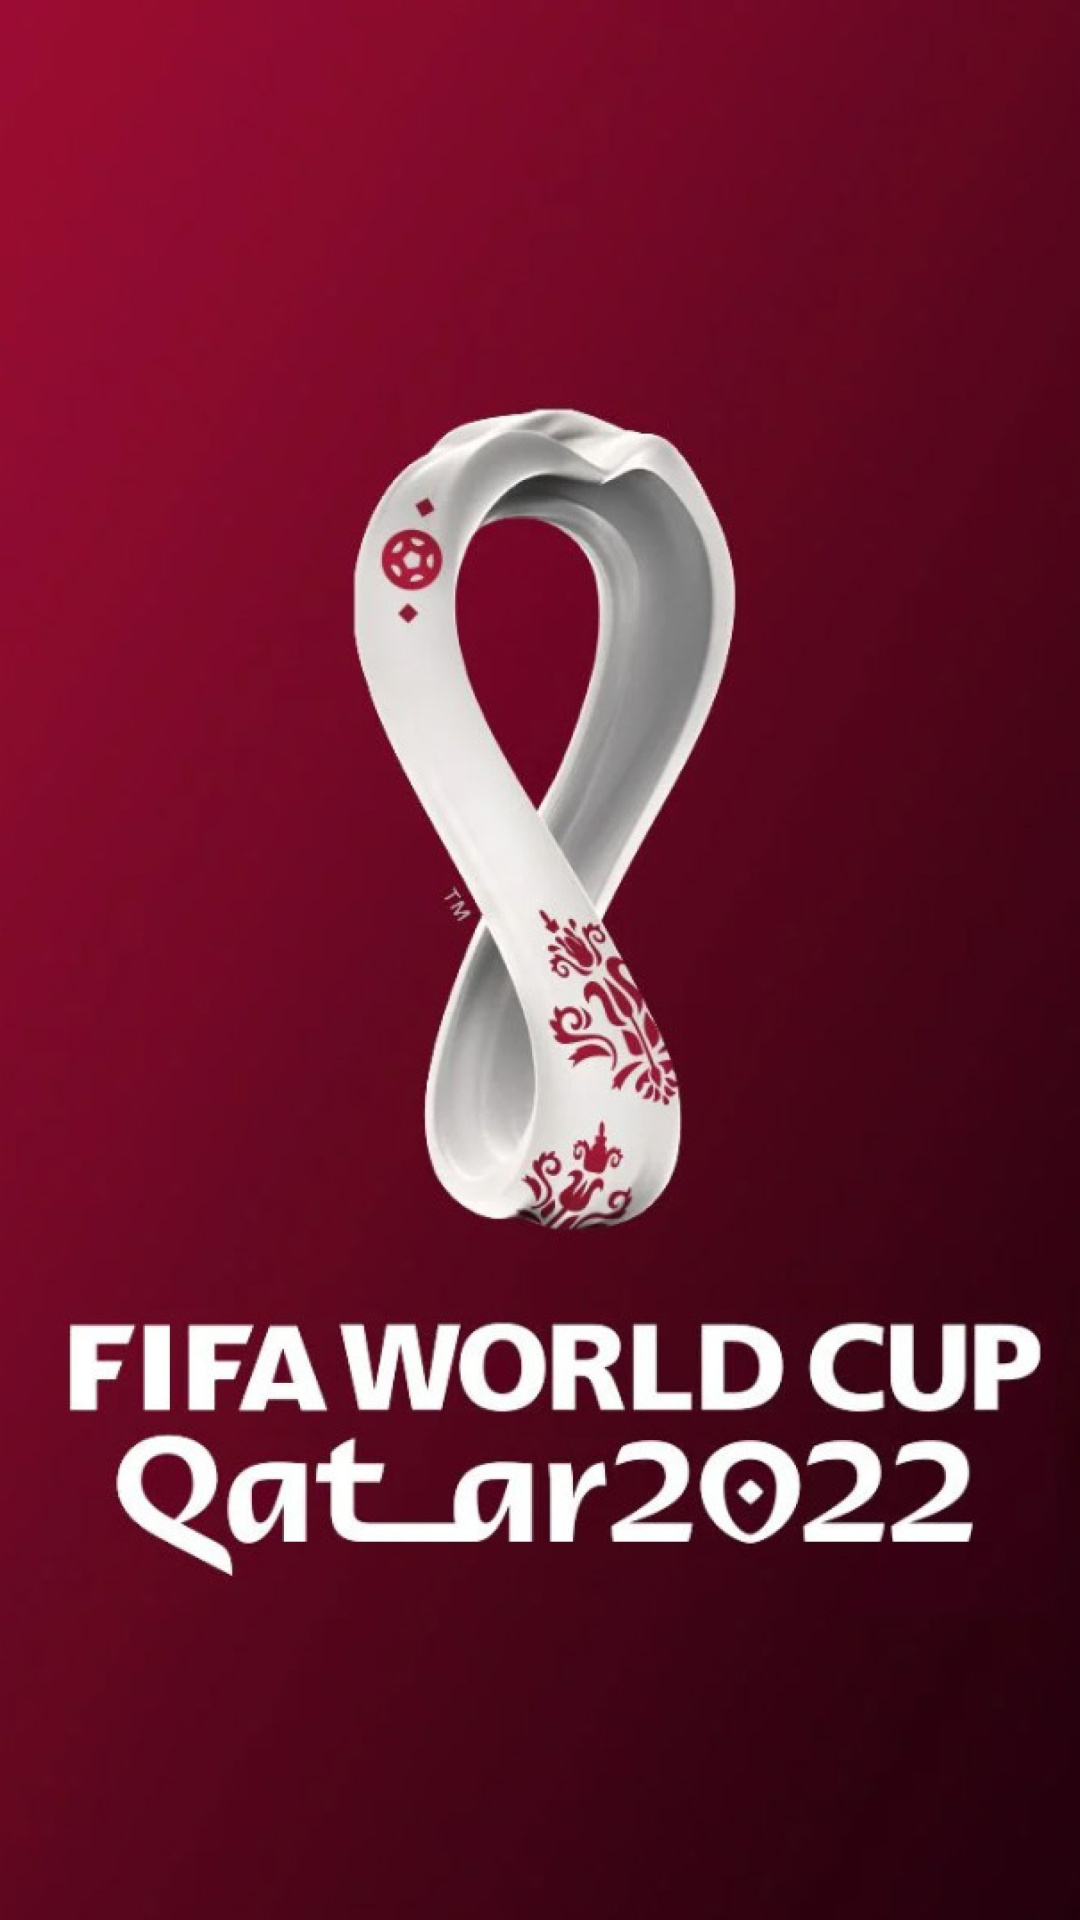 World Cup Qatar 2022 wallpaper 1080x1920